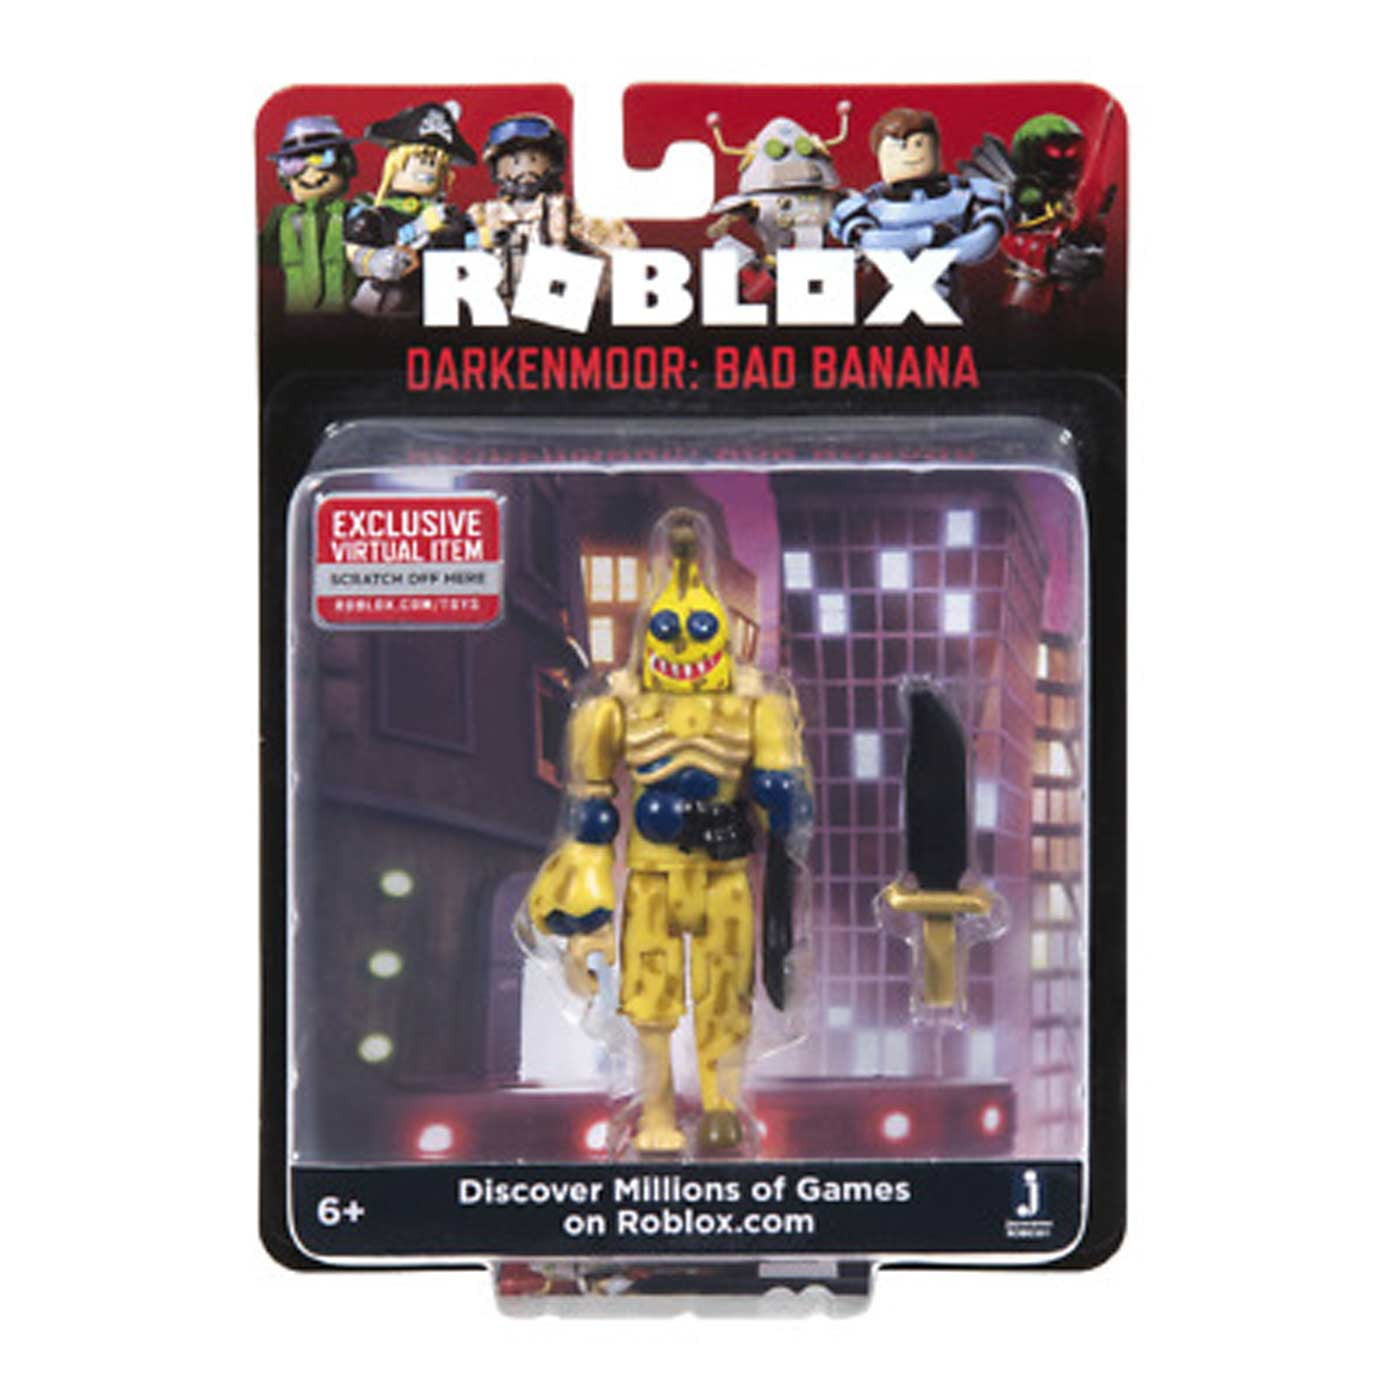 Roblox Action Collection Darkenmoor Bad Banana Figure Pack Includes Exclusive Virtual Item Walmart Com Walmart Com - shadow item pack roblox